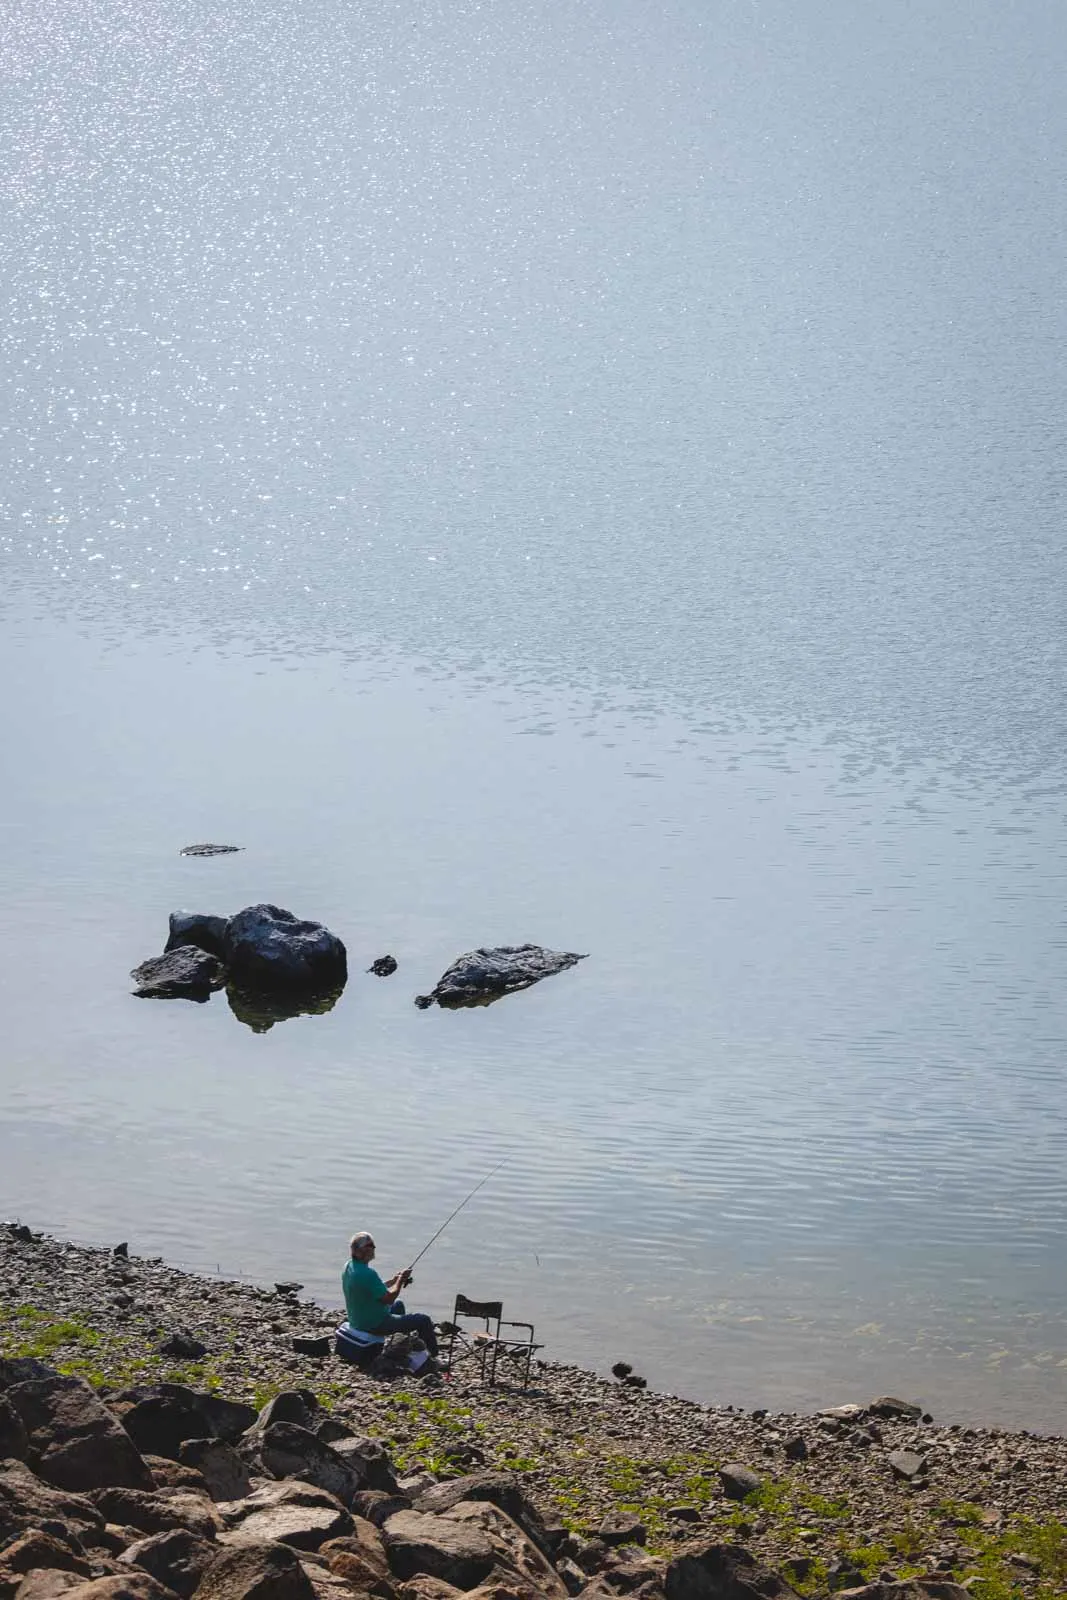 You can go fishing at Ochoco Reservoir at Ochoco National Forest.